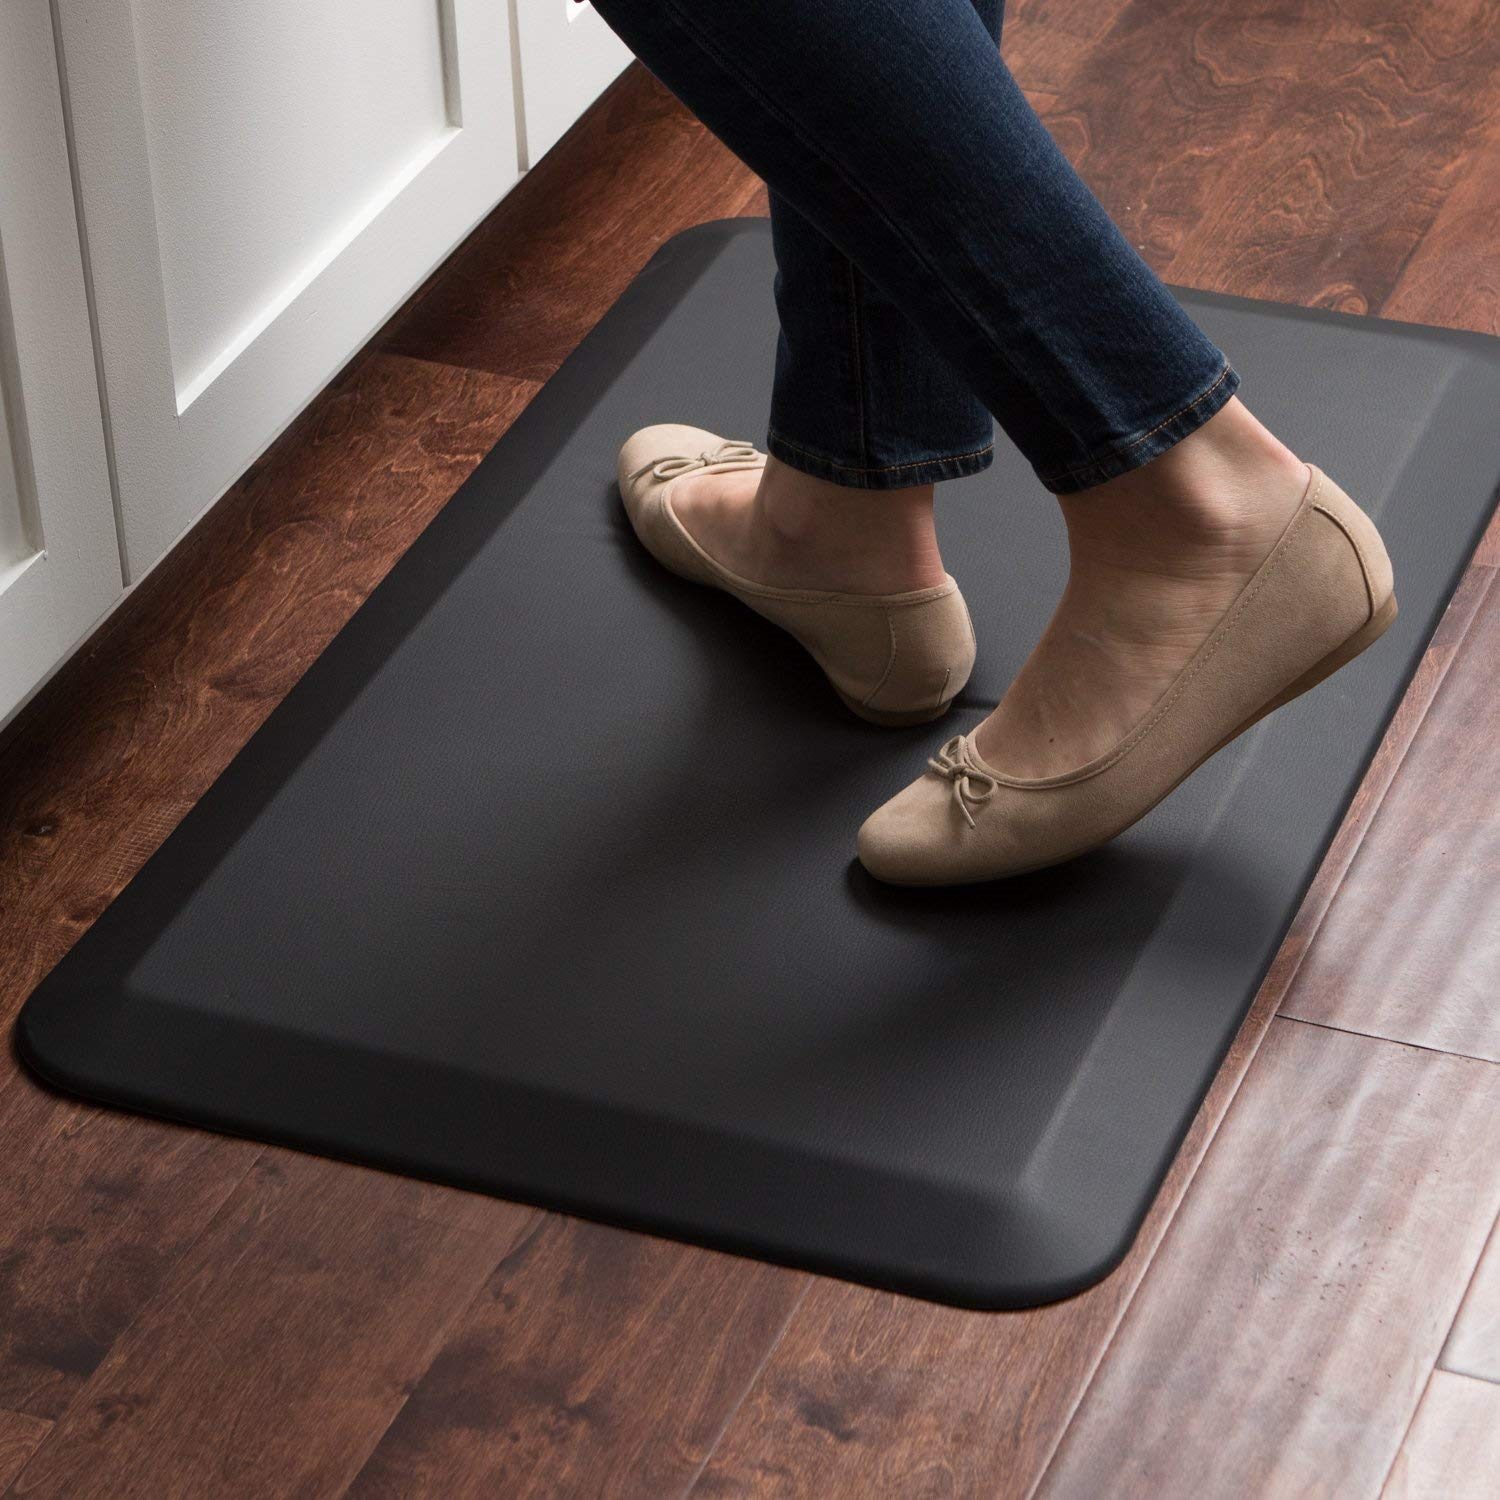 Anti-Fatigue Comfort Mat Non-Slip Durable Cushioned Floor Pad